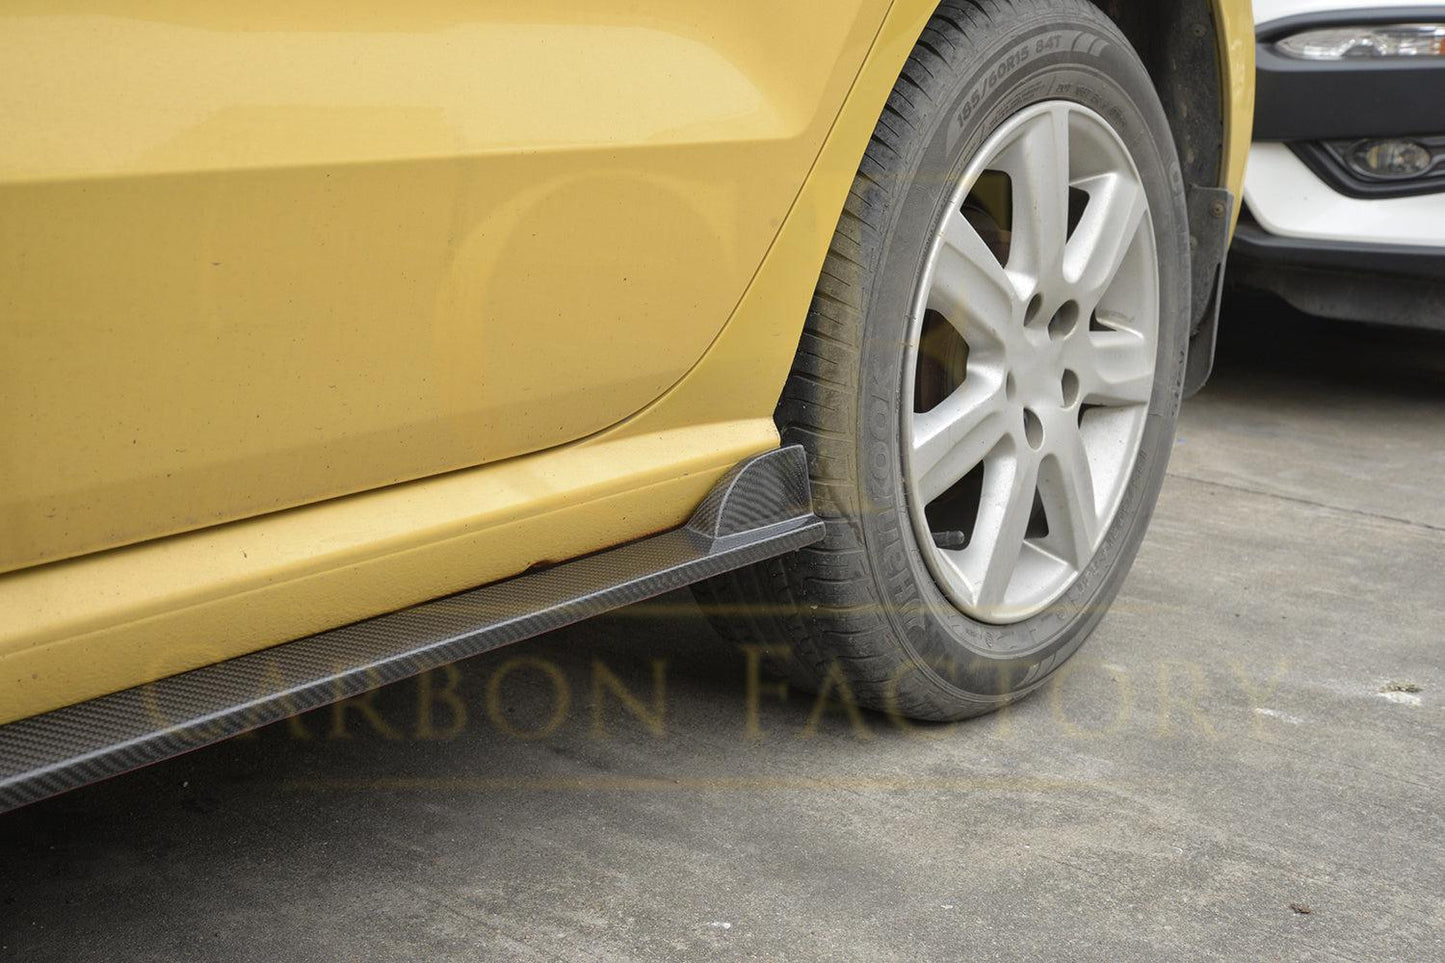 VW Polo MK5 non GTI V Style Carbon Fibre Side Skirt 11-16-Carbon Factory